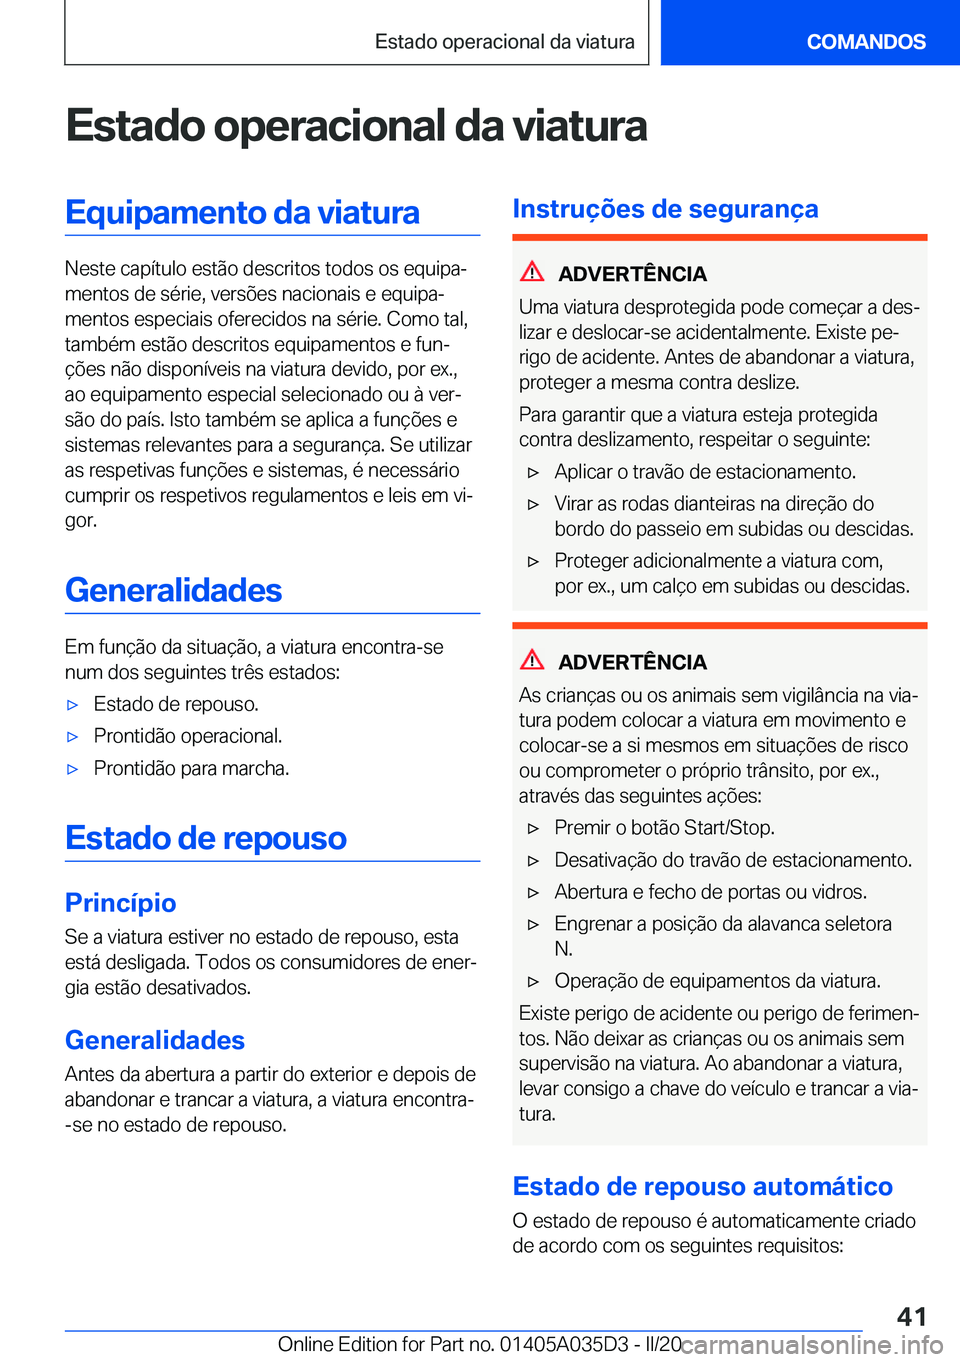 BMW X4 2020  Manual do condutor (in Portuguese) �E�s�t�a�d�o��o�p�e�r�a�c�i�o�n�a�l��d�a��v�i�a�t�u�r�a�E�q�u�i�p�a�m�e�n�t�o��d�a��v�i�a�t�u�r�a
�N�e�s�t�e��c�a�p�